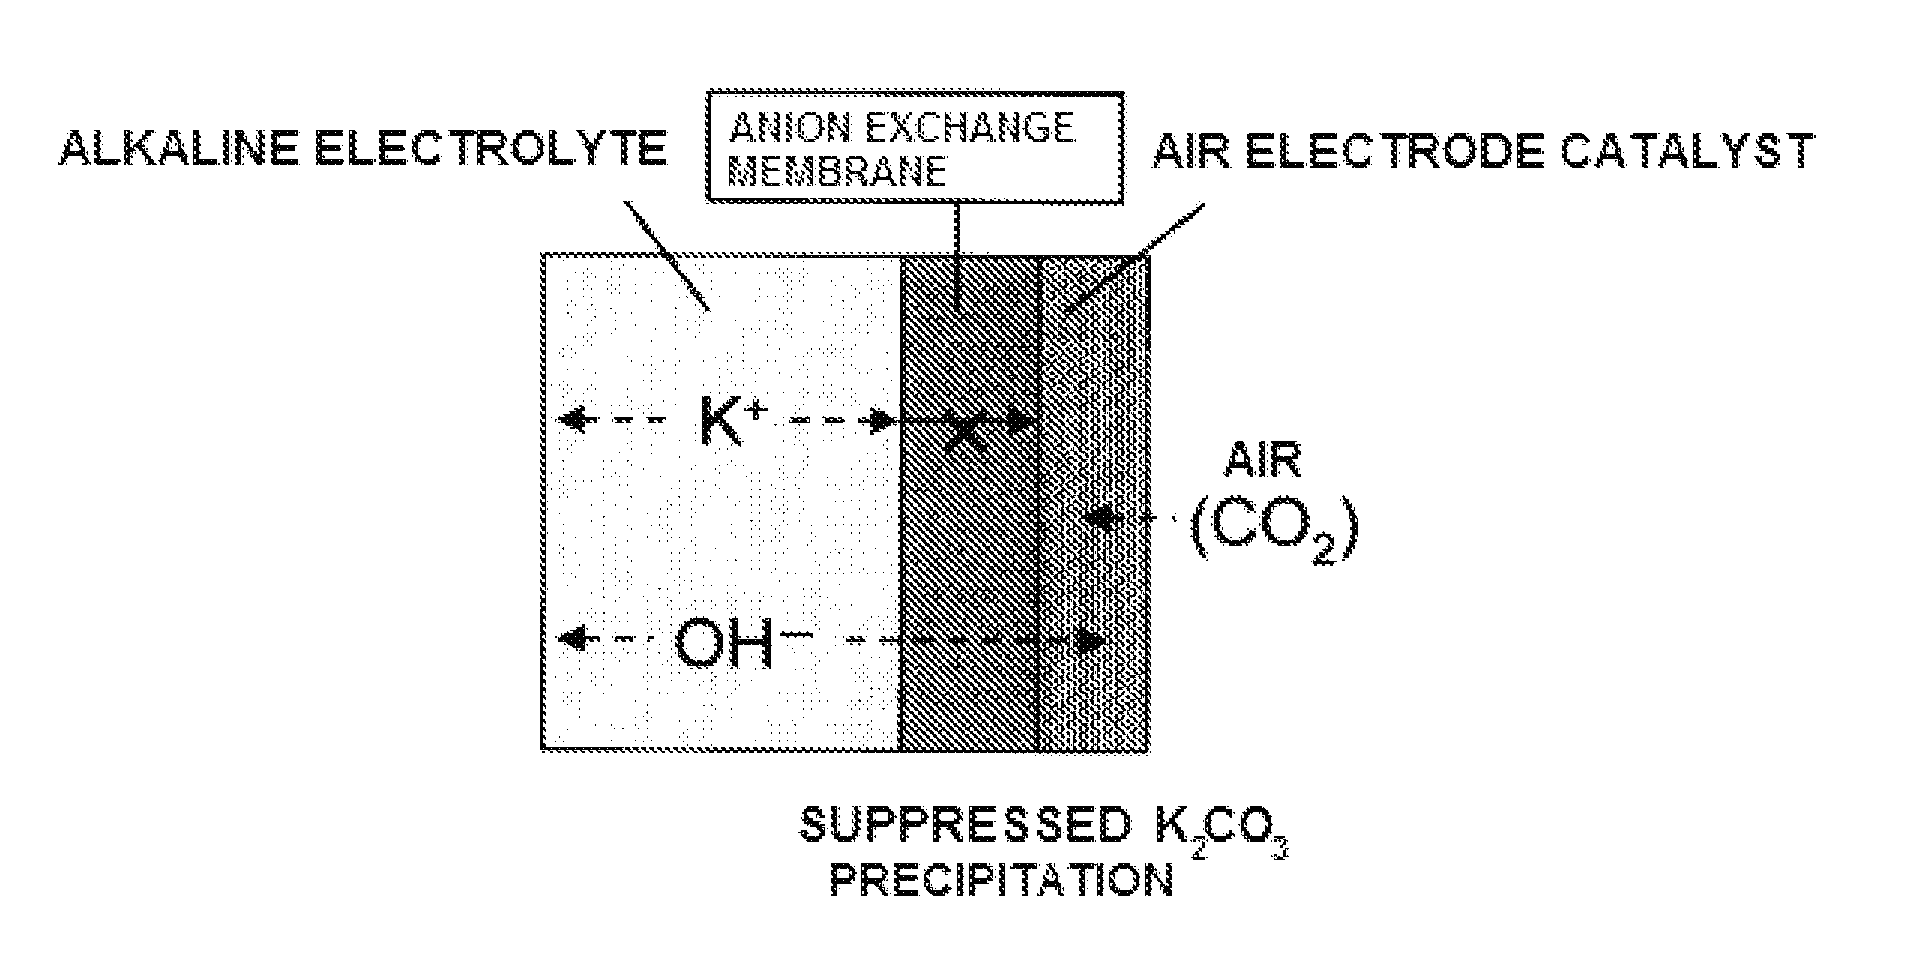 Air electrode